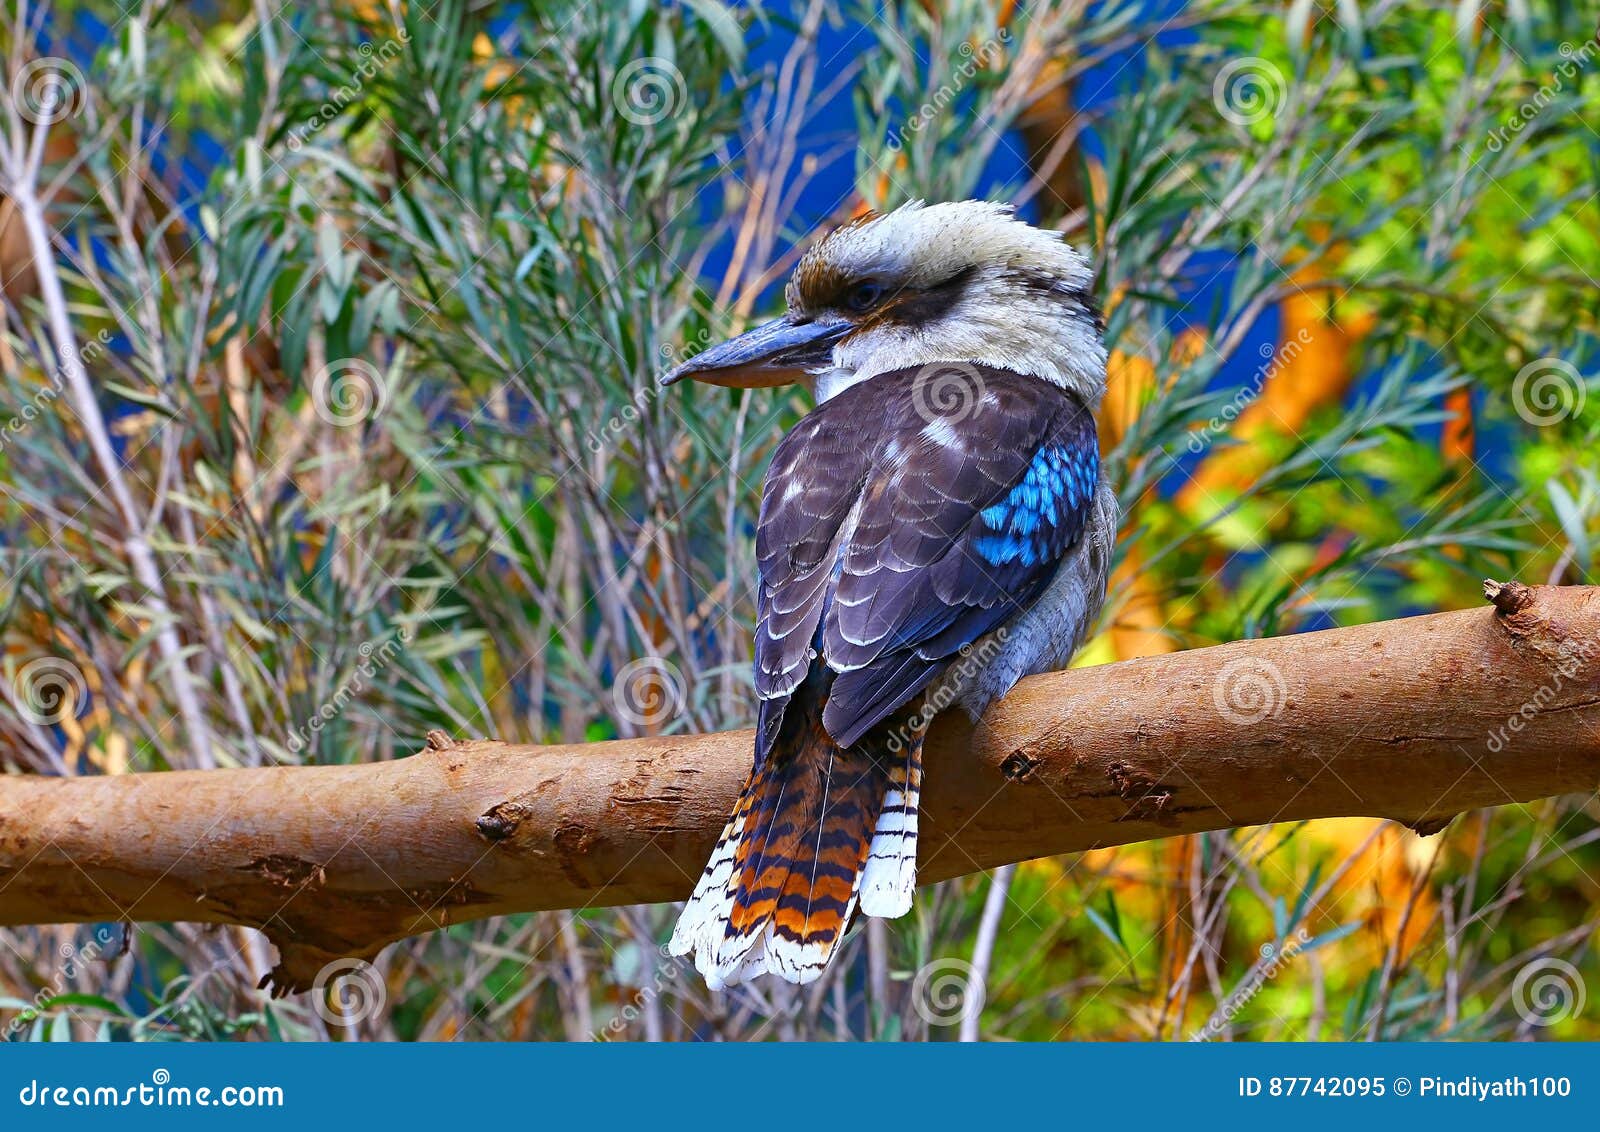 australian laughing kookaburra bird